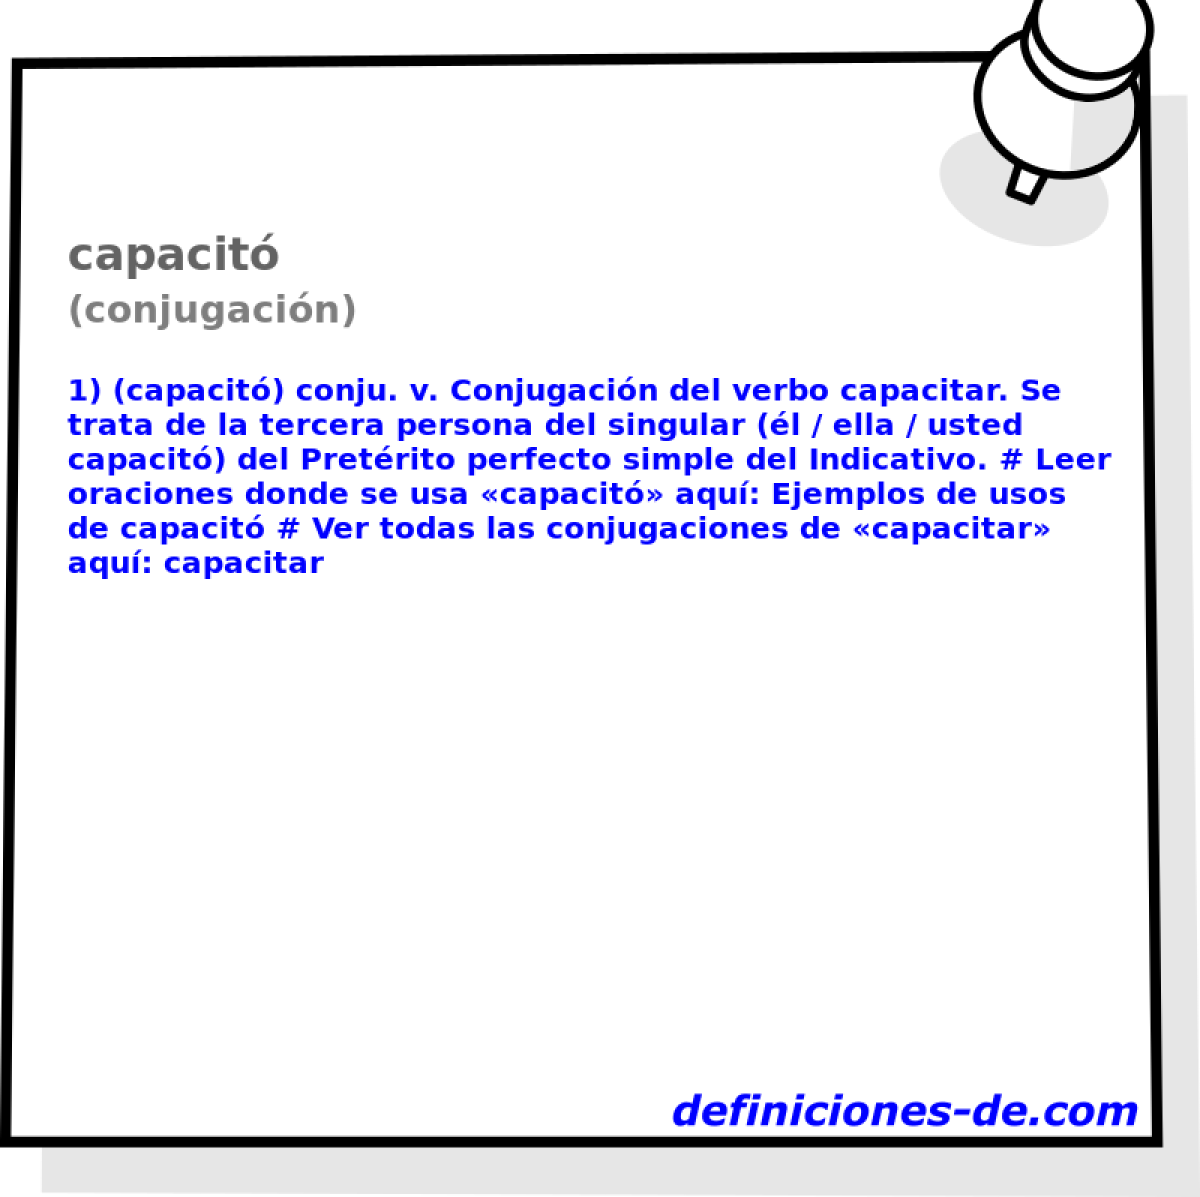 capacit (conjugacin)